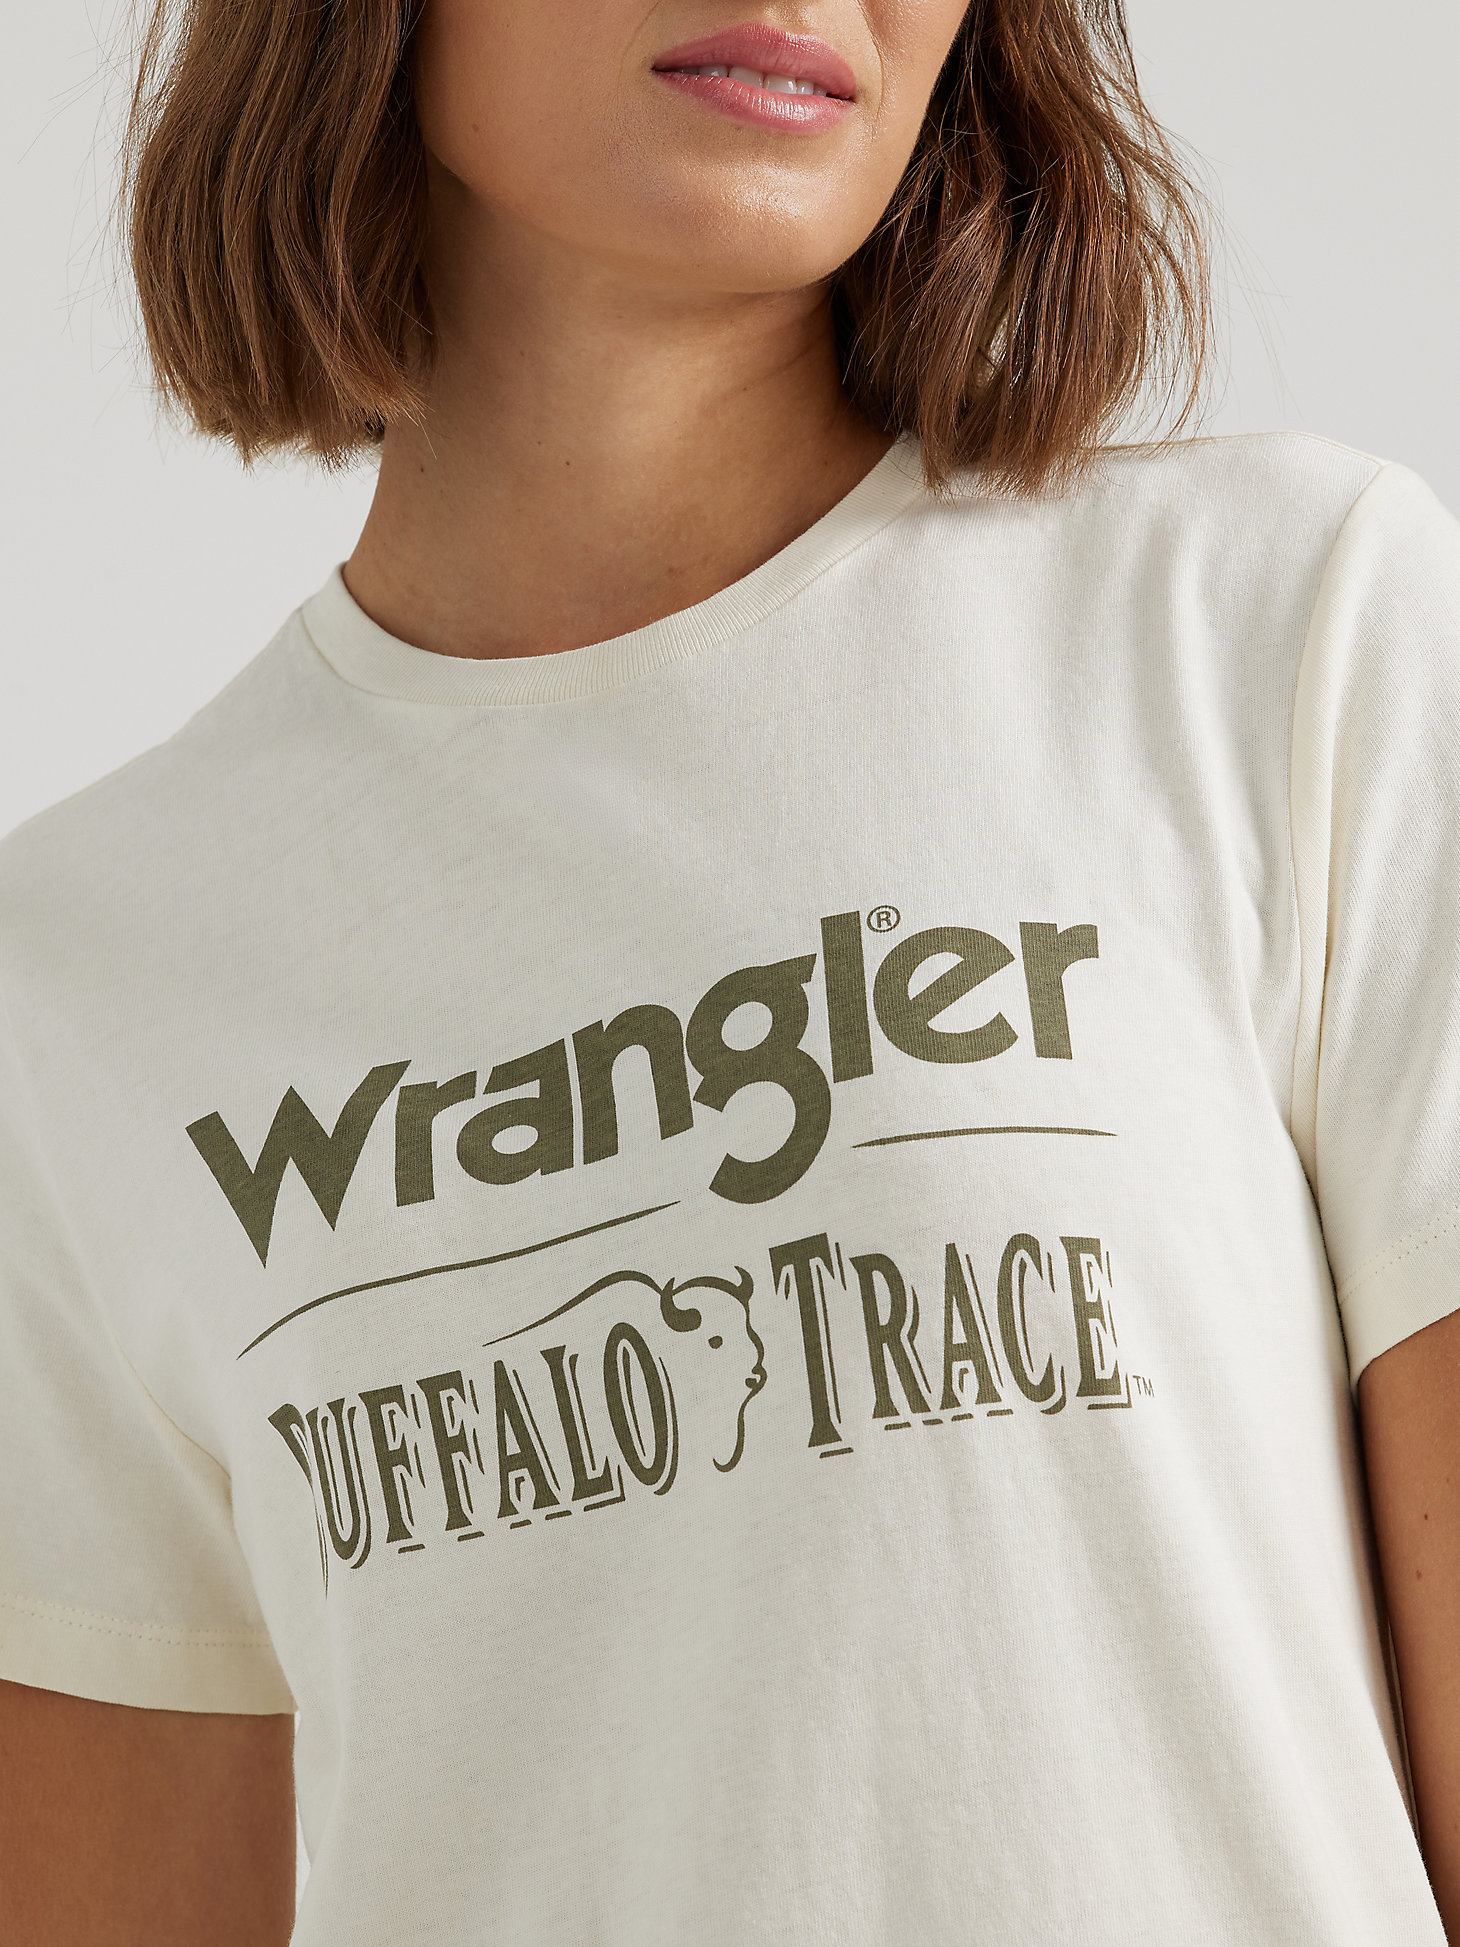 Wrangler x Buffalo Trace™ Women's Logo Tee in Vanilla alternative view 3